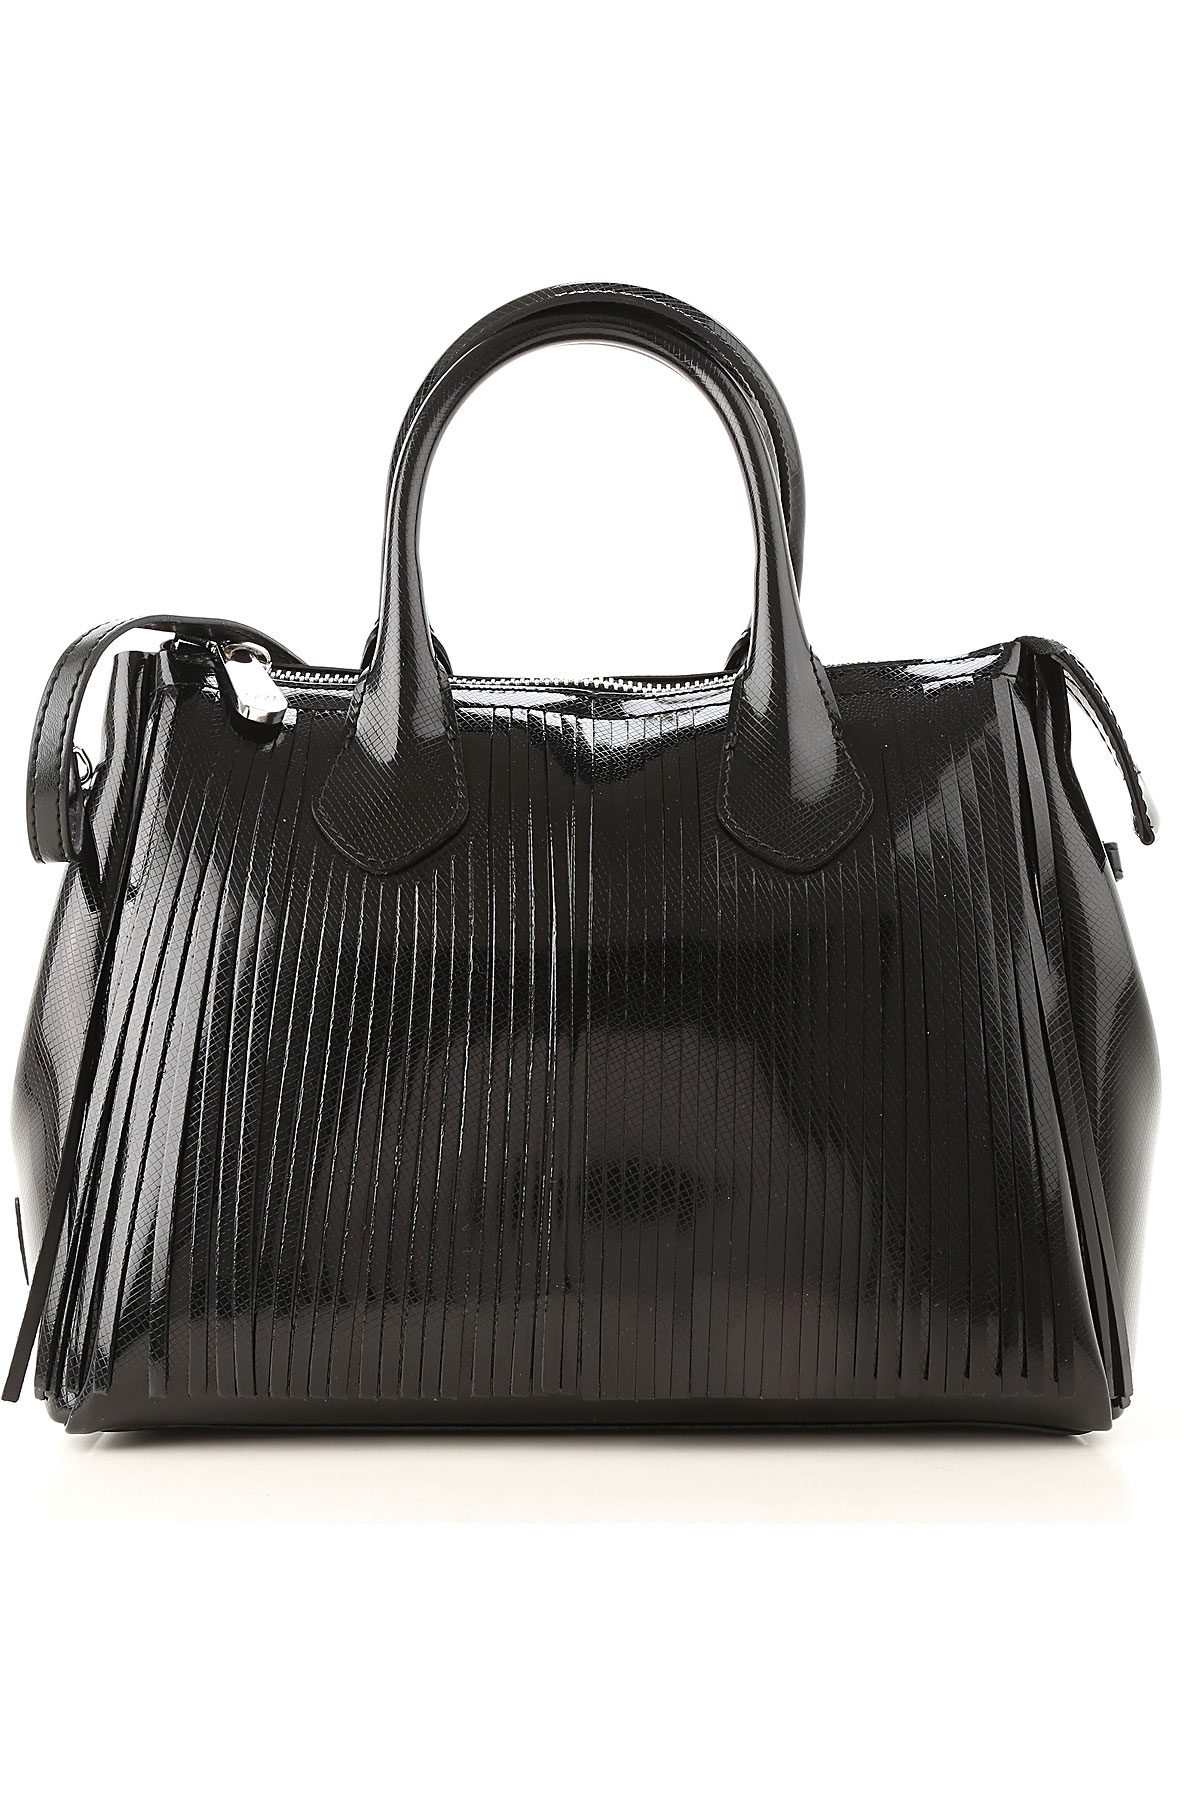 Handbags GUM Gianni Chiarini Design, Style code: 3700t-9434-